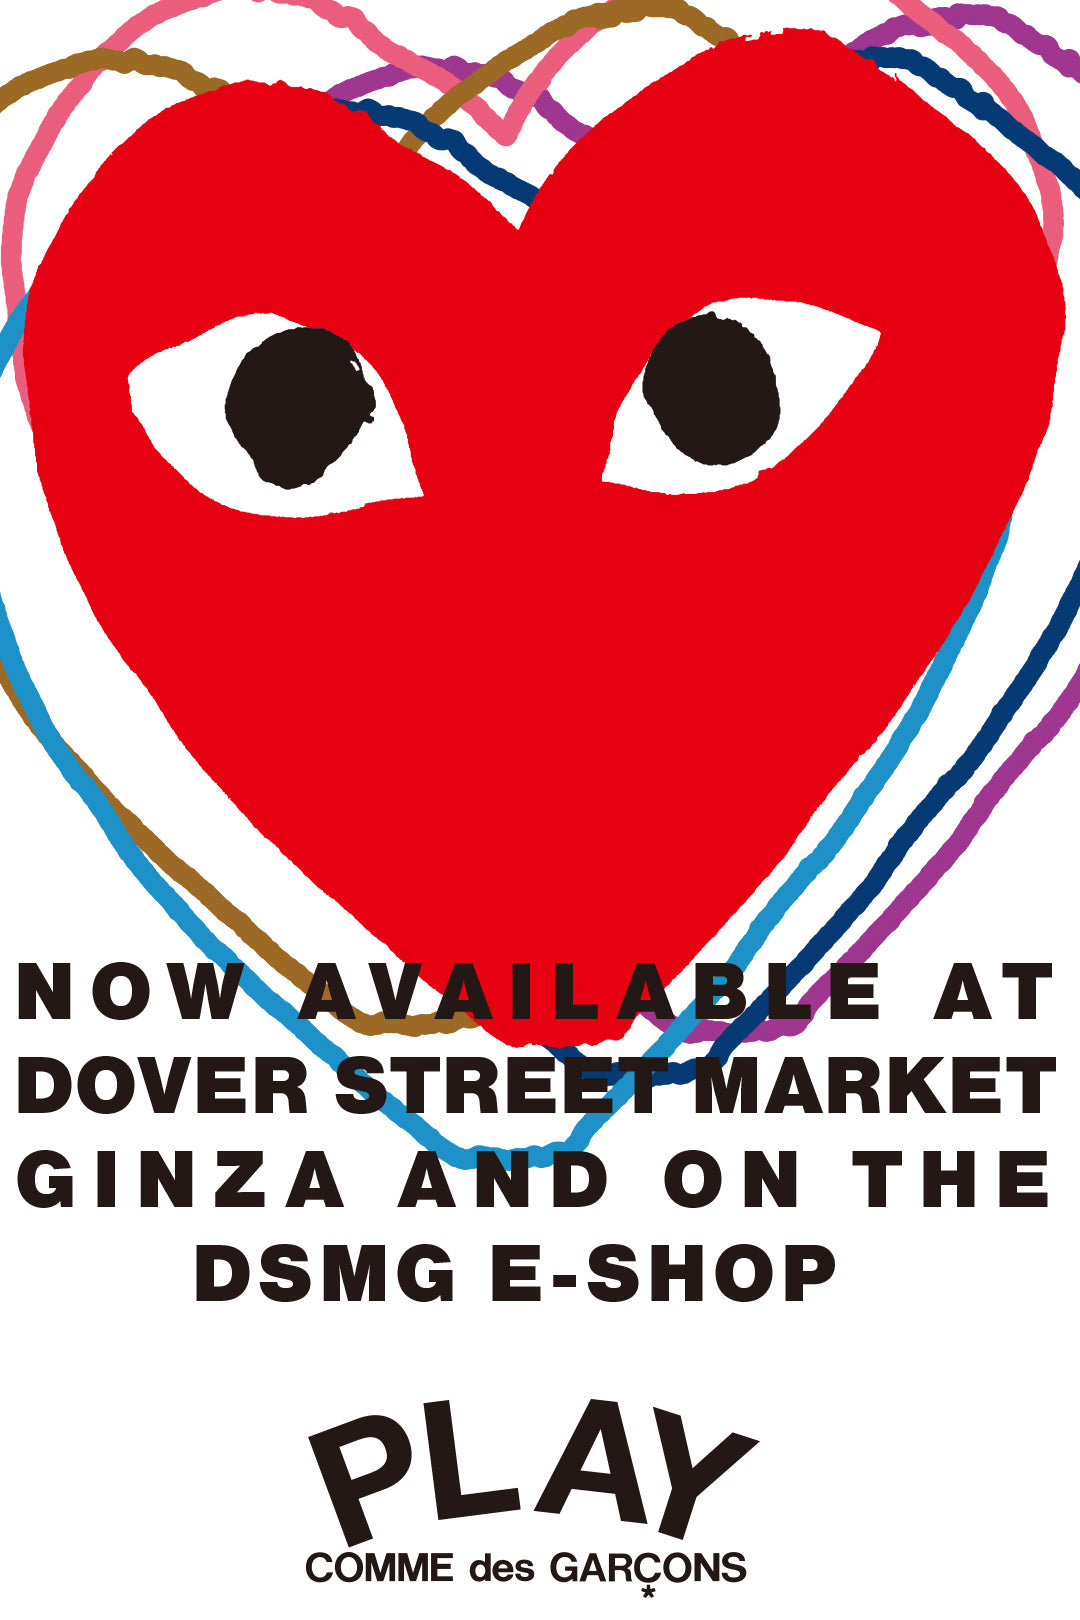 DSMG E-SHOP